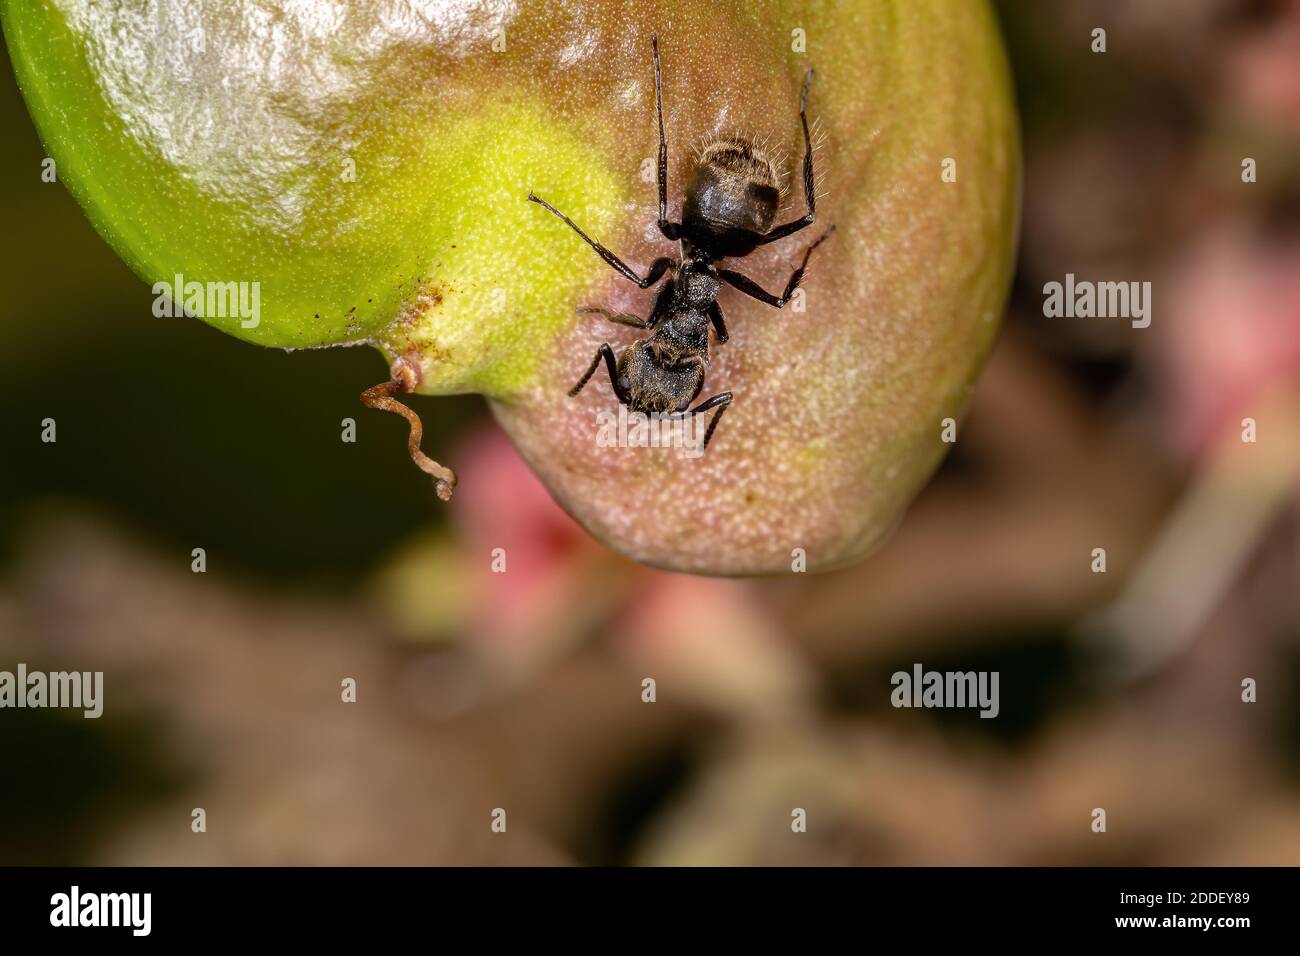 Odorous Ant of the species Dolichoderus bispinosus Stock Photo